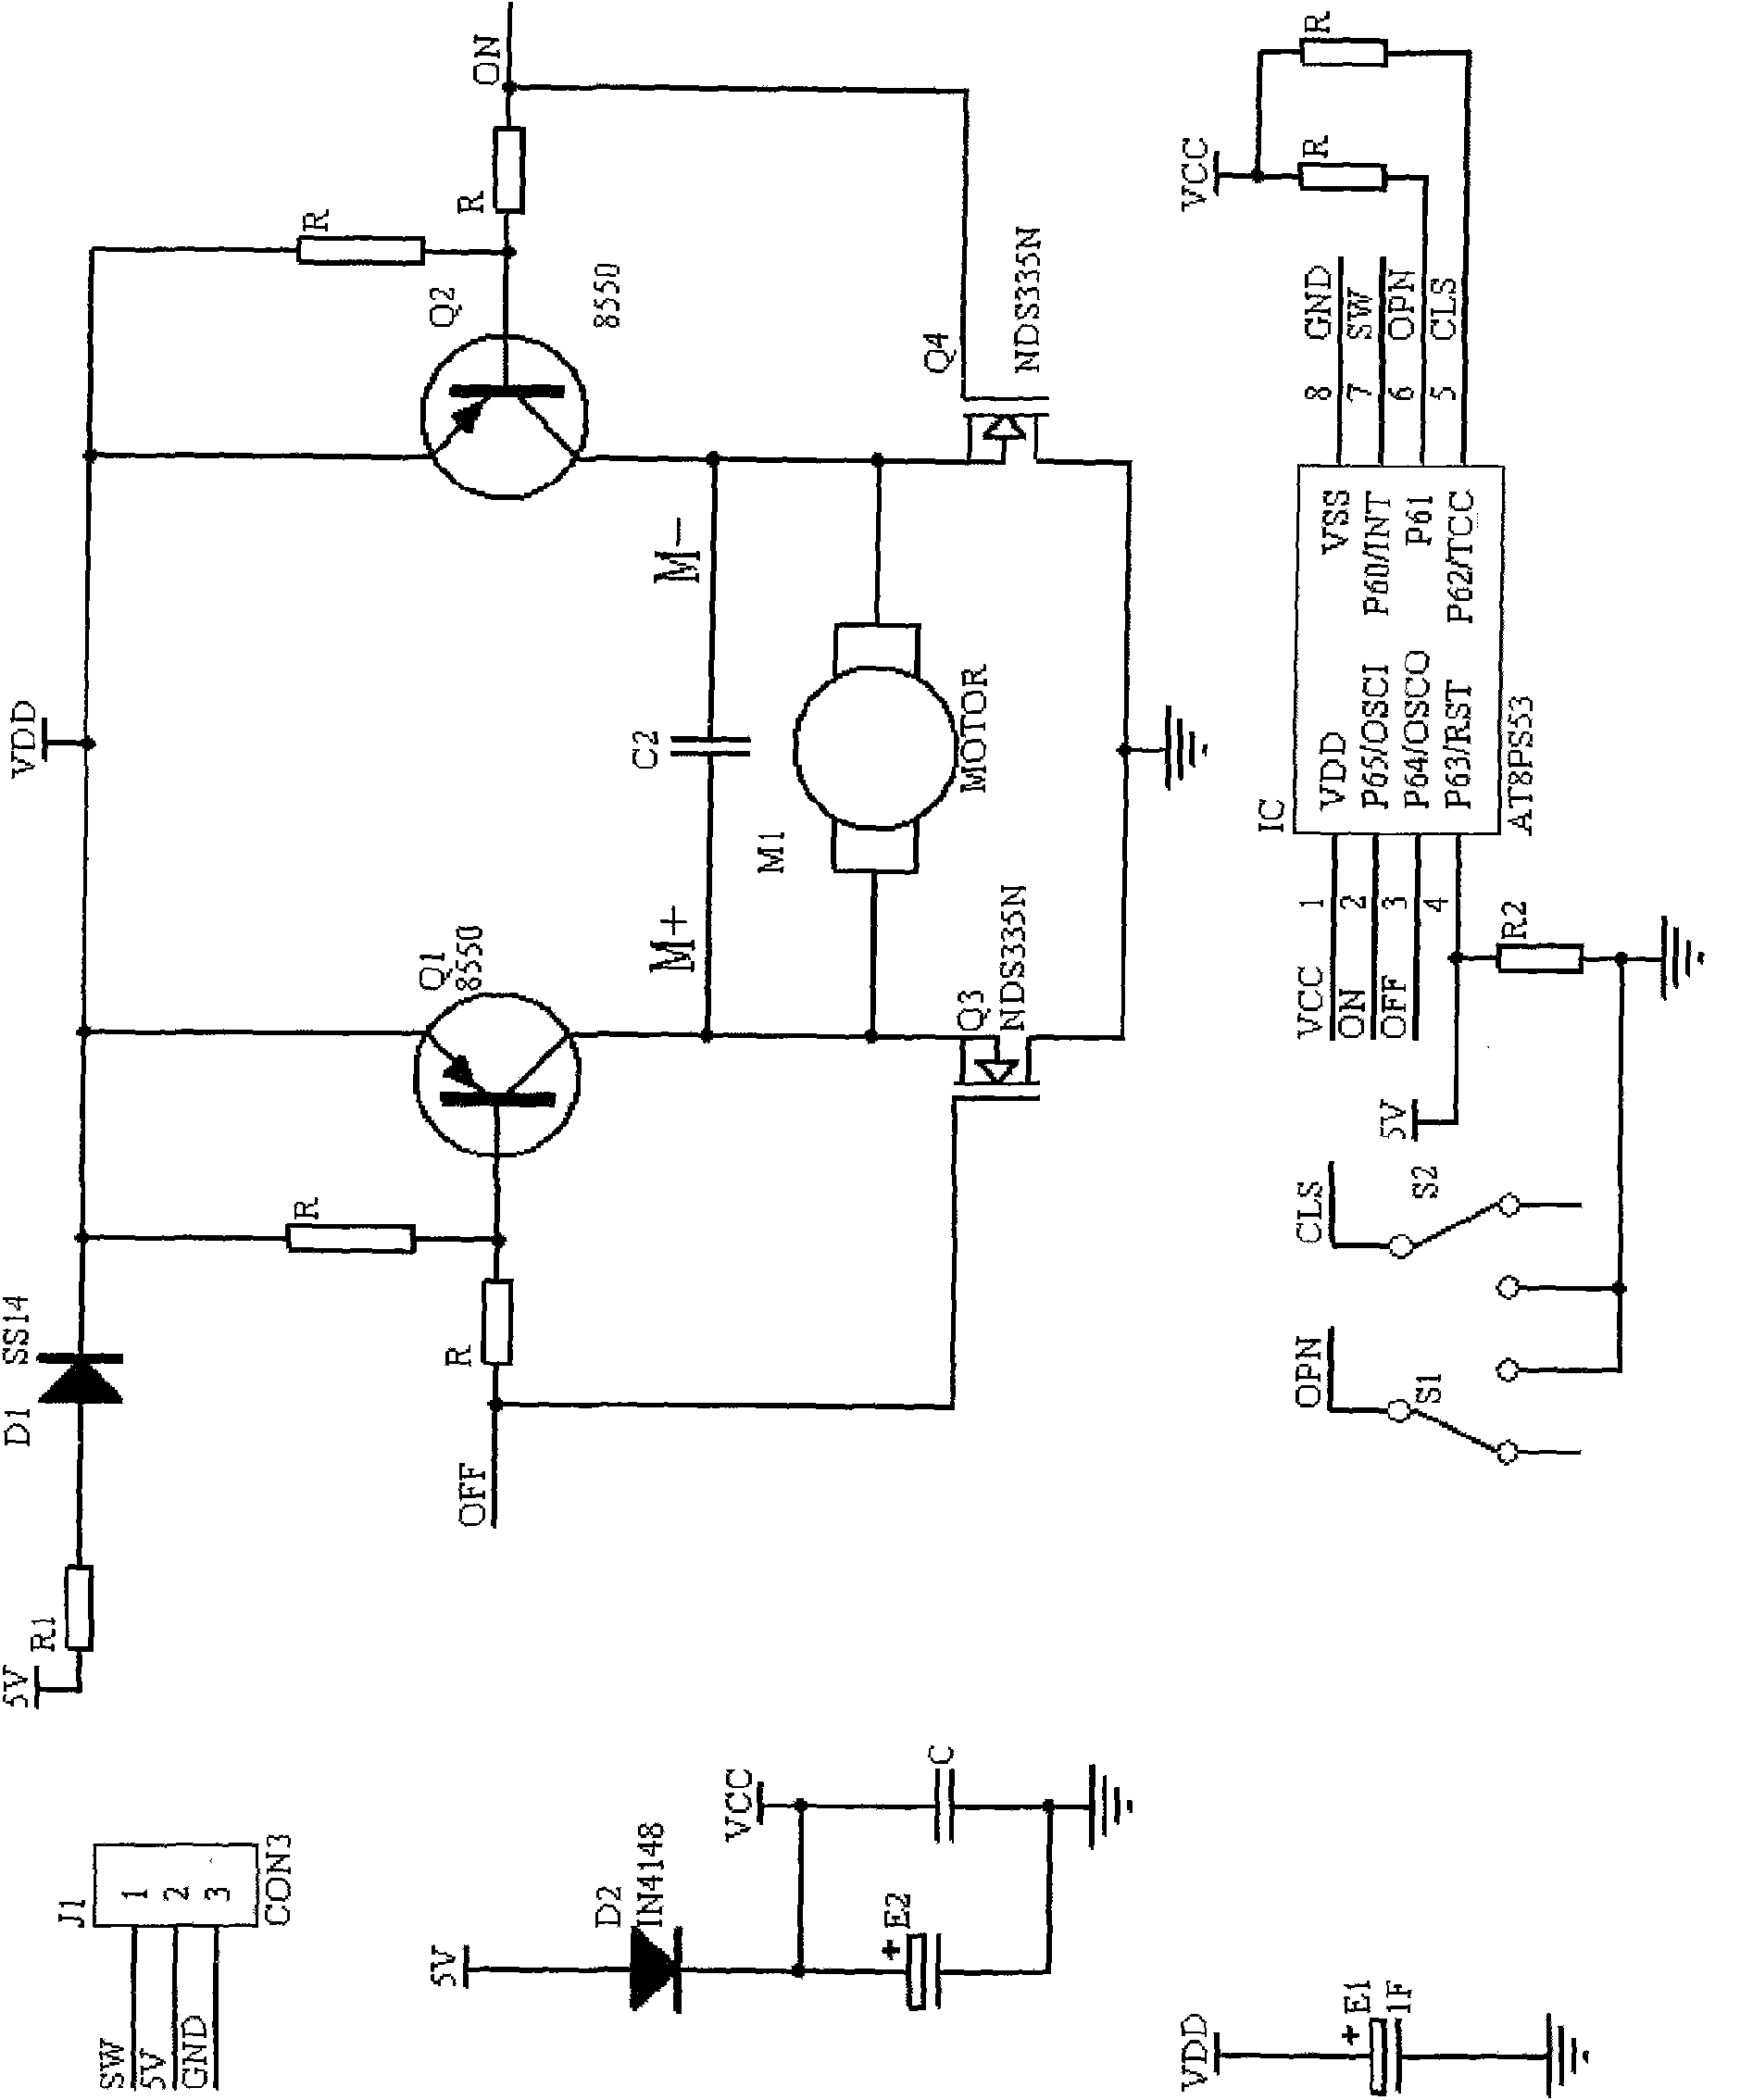 Control circuit of heater control valve